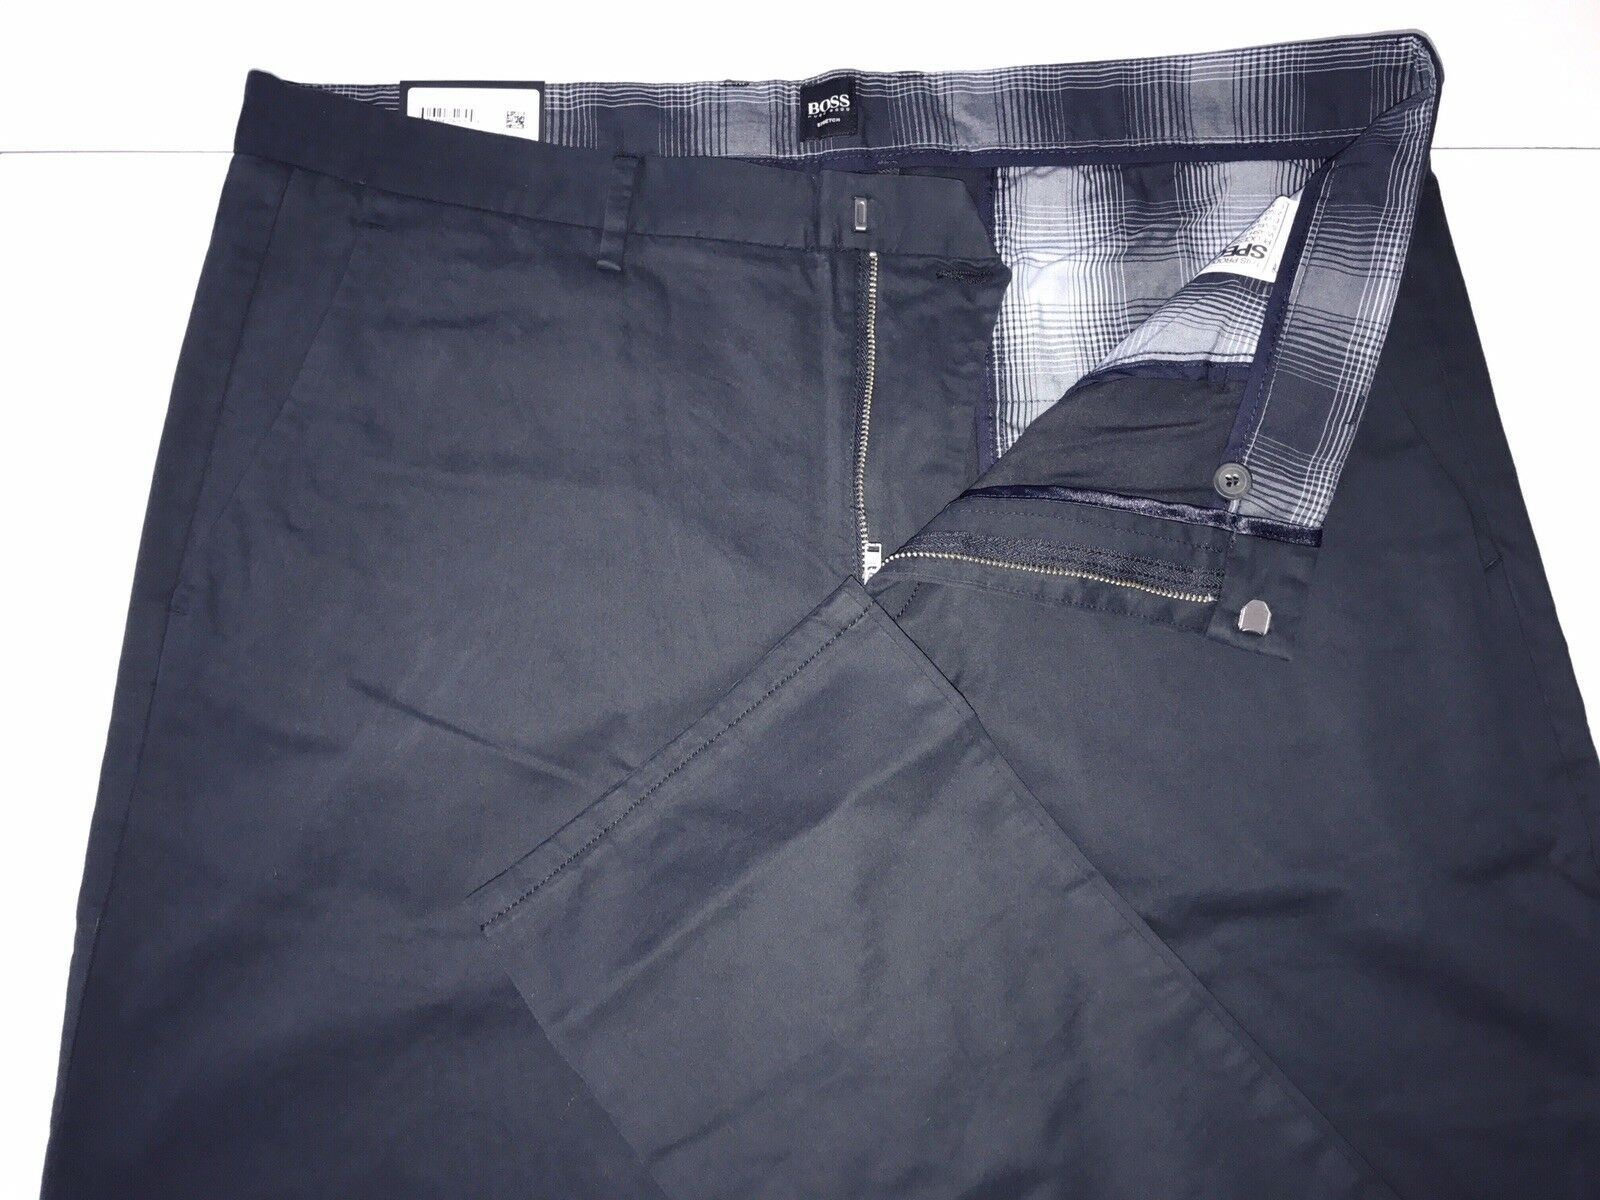 NWT $215 Boss Hugo Boss Clive Mens Cotton Slim Fit Dark Blue Pants 54 Eu(38R US)